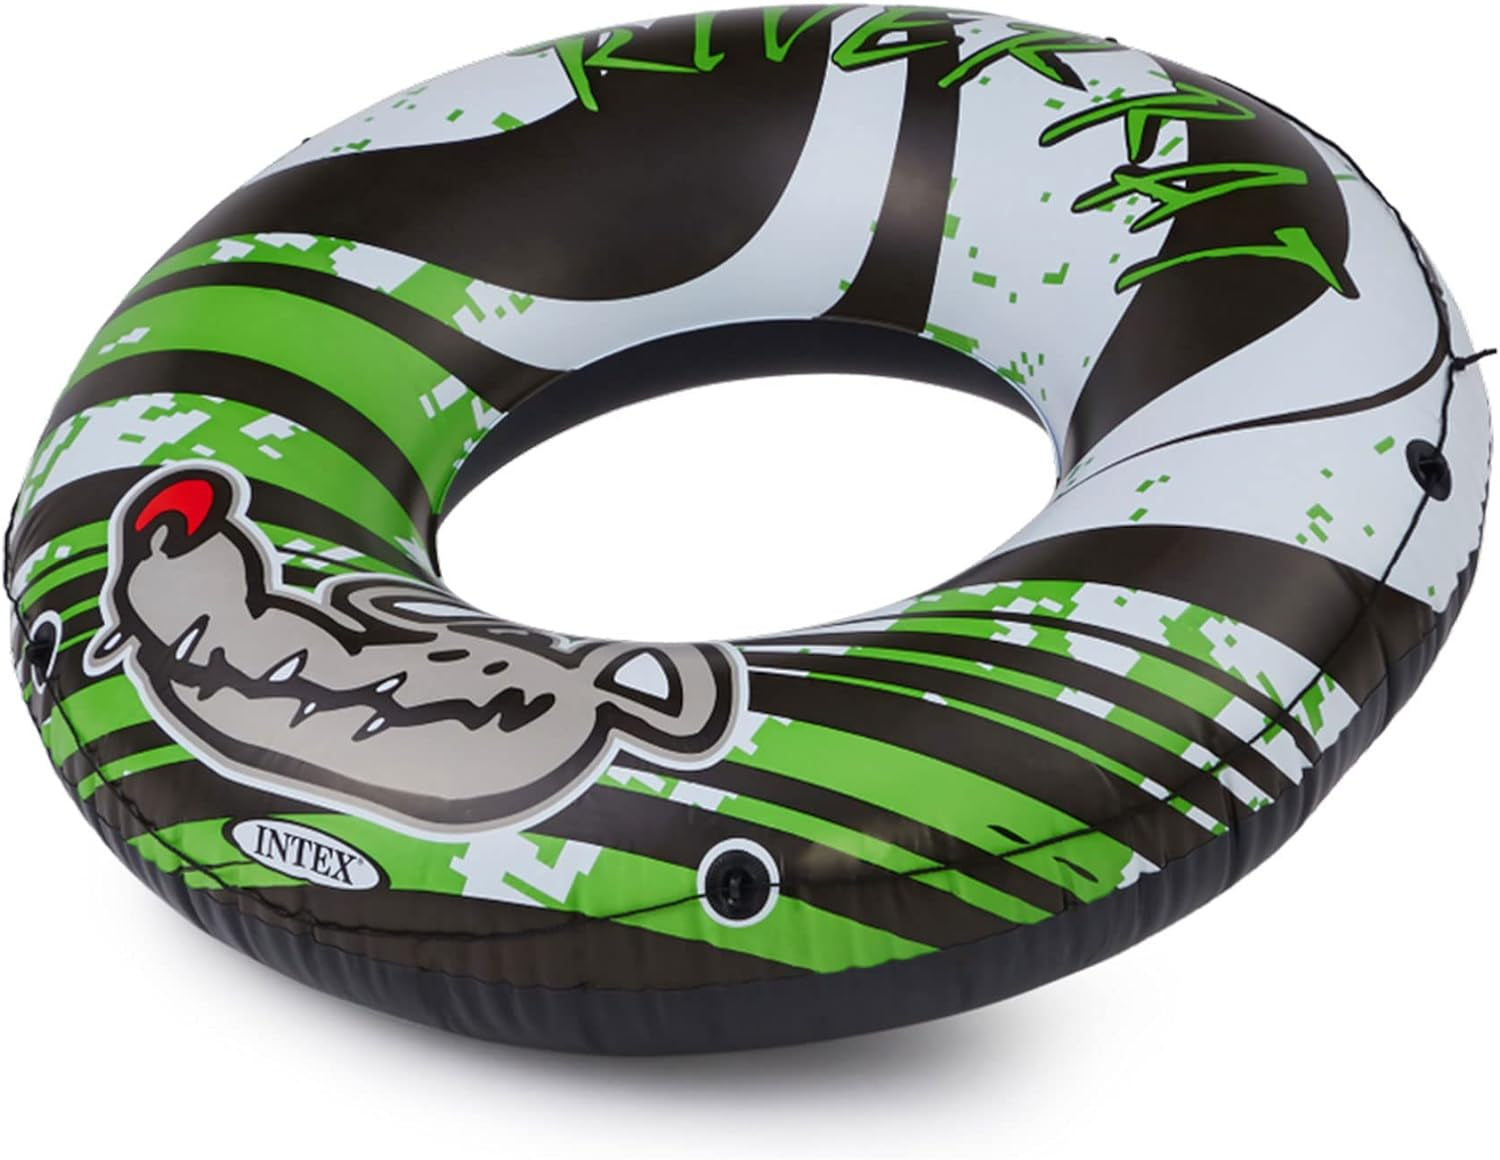 River Rat 48 Inch Inflatable Vinyl Towable Boat Floating Tube Raft for Swimming Pool and Lake in Green Rat or Graffiti Rat Design, Color Varies